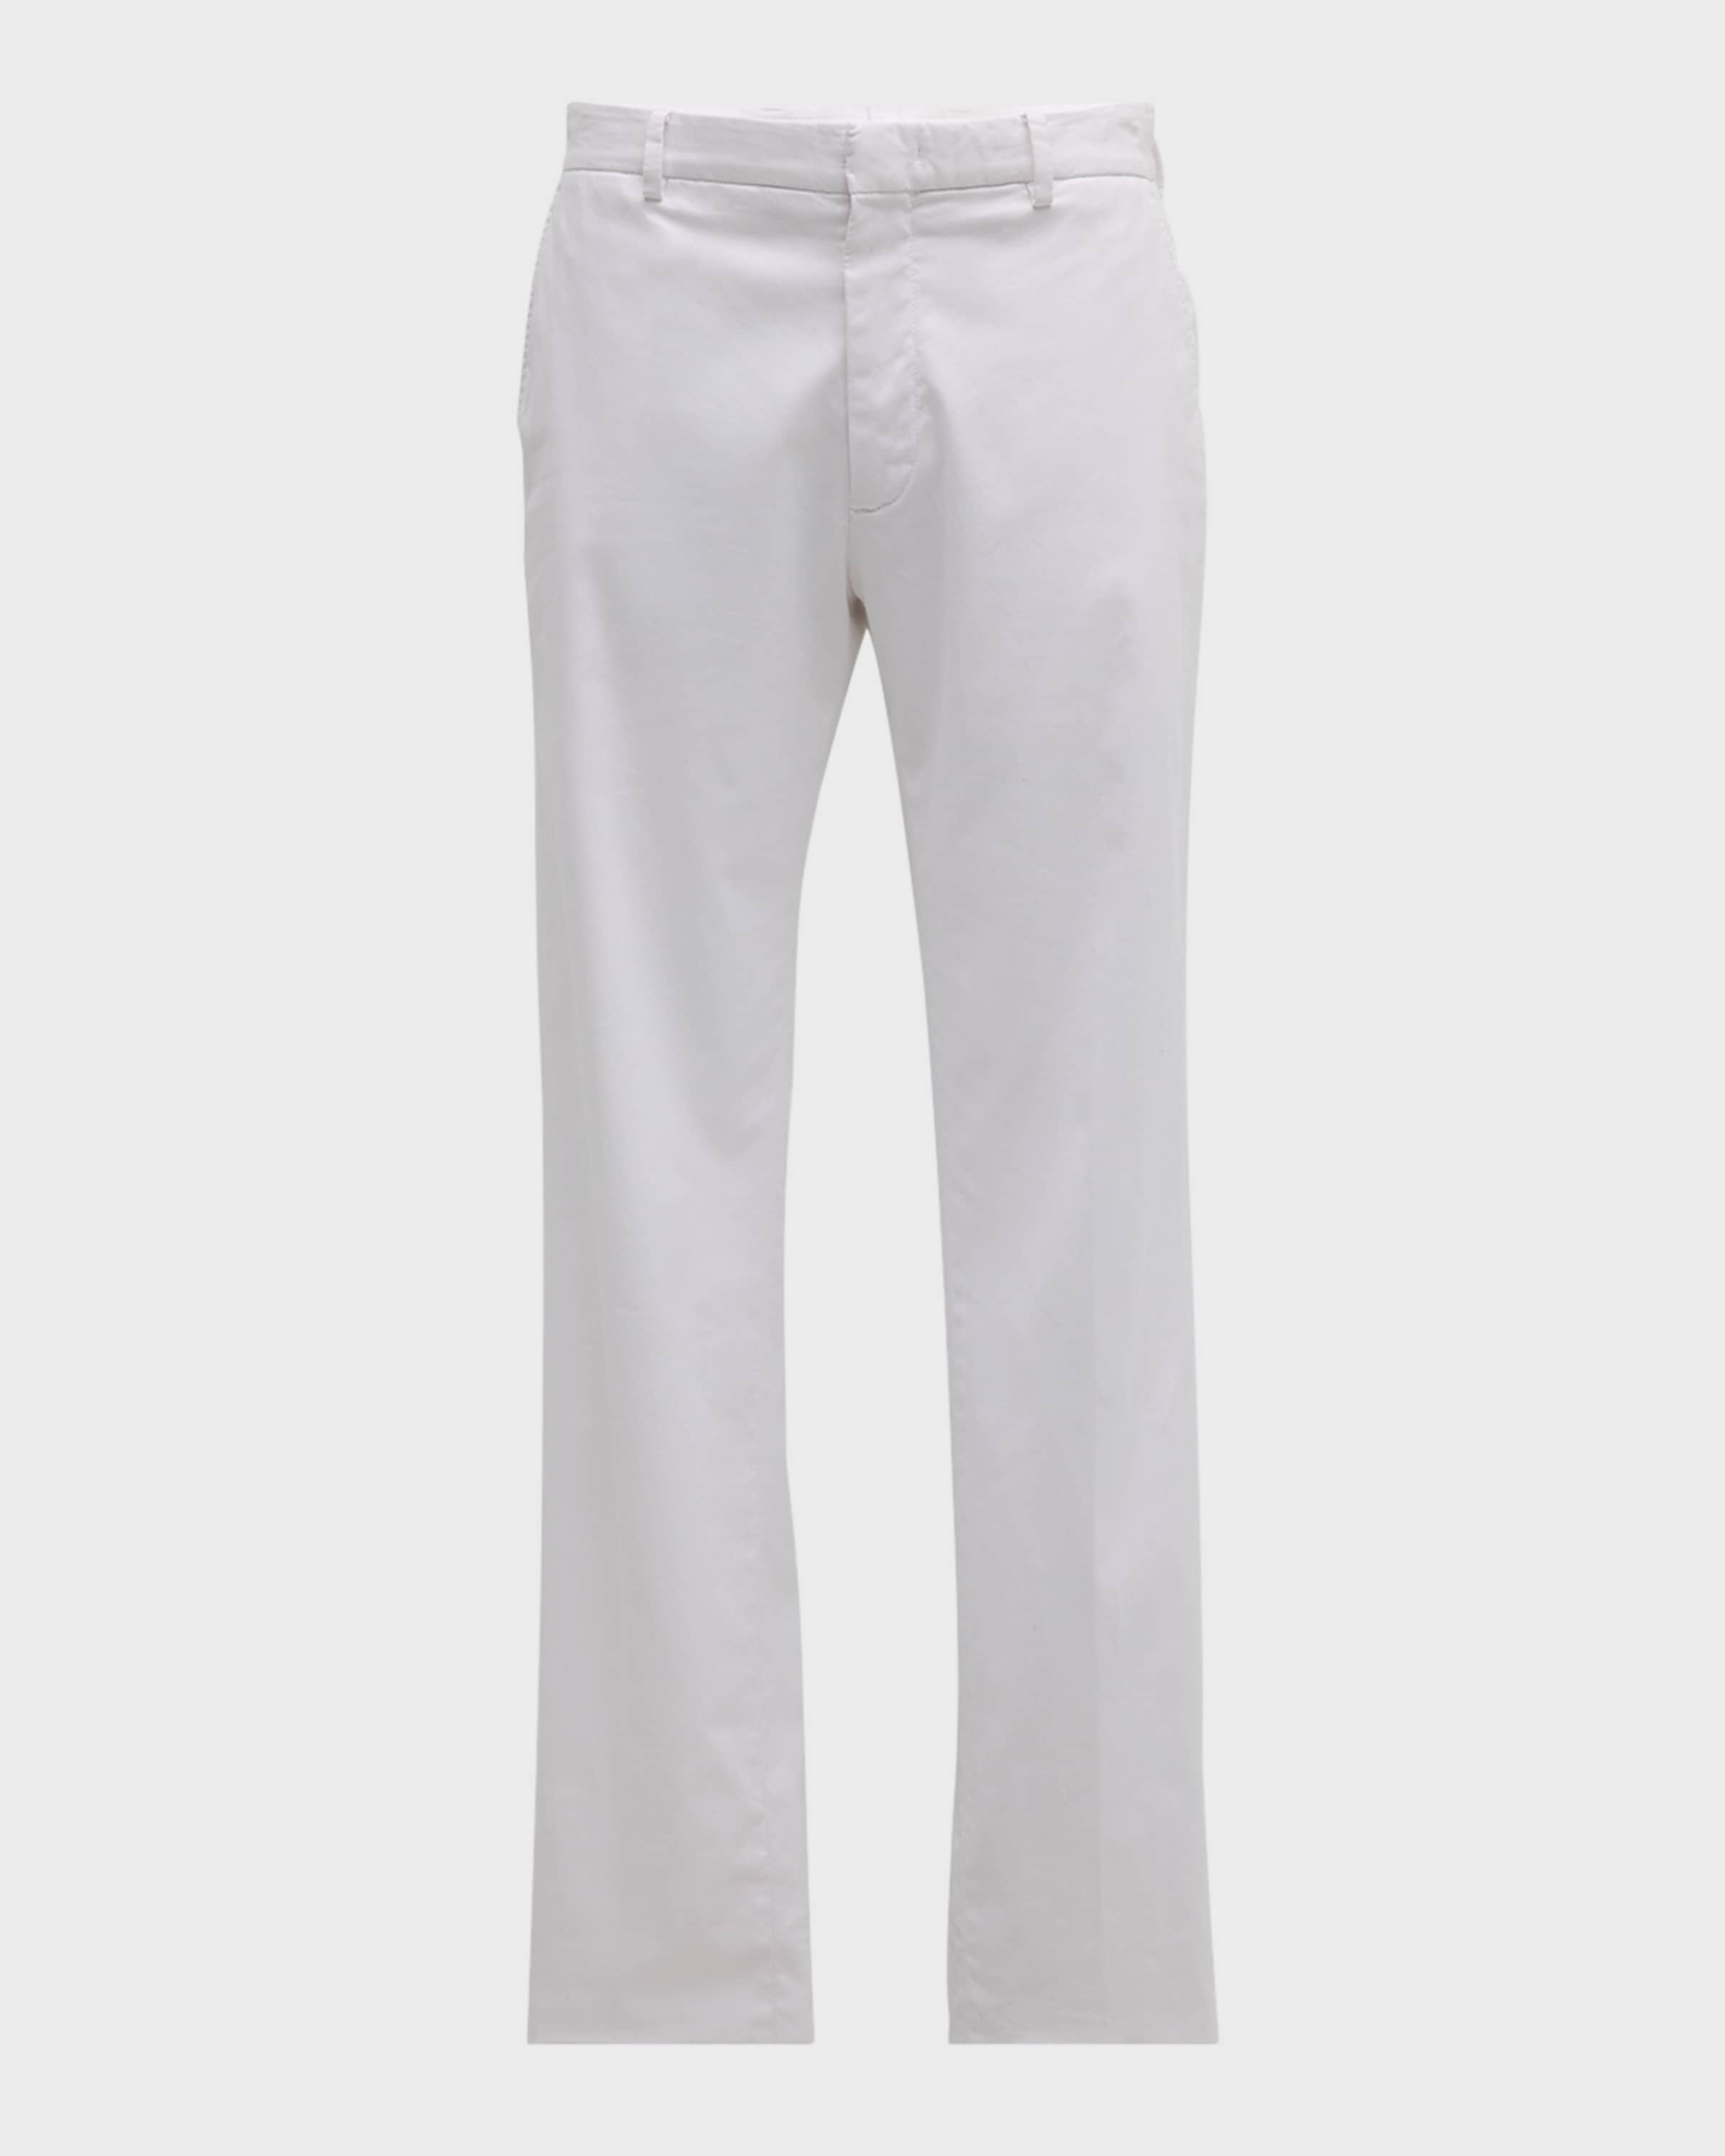 Men's Slim Flat-Front Pants - 1